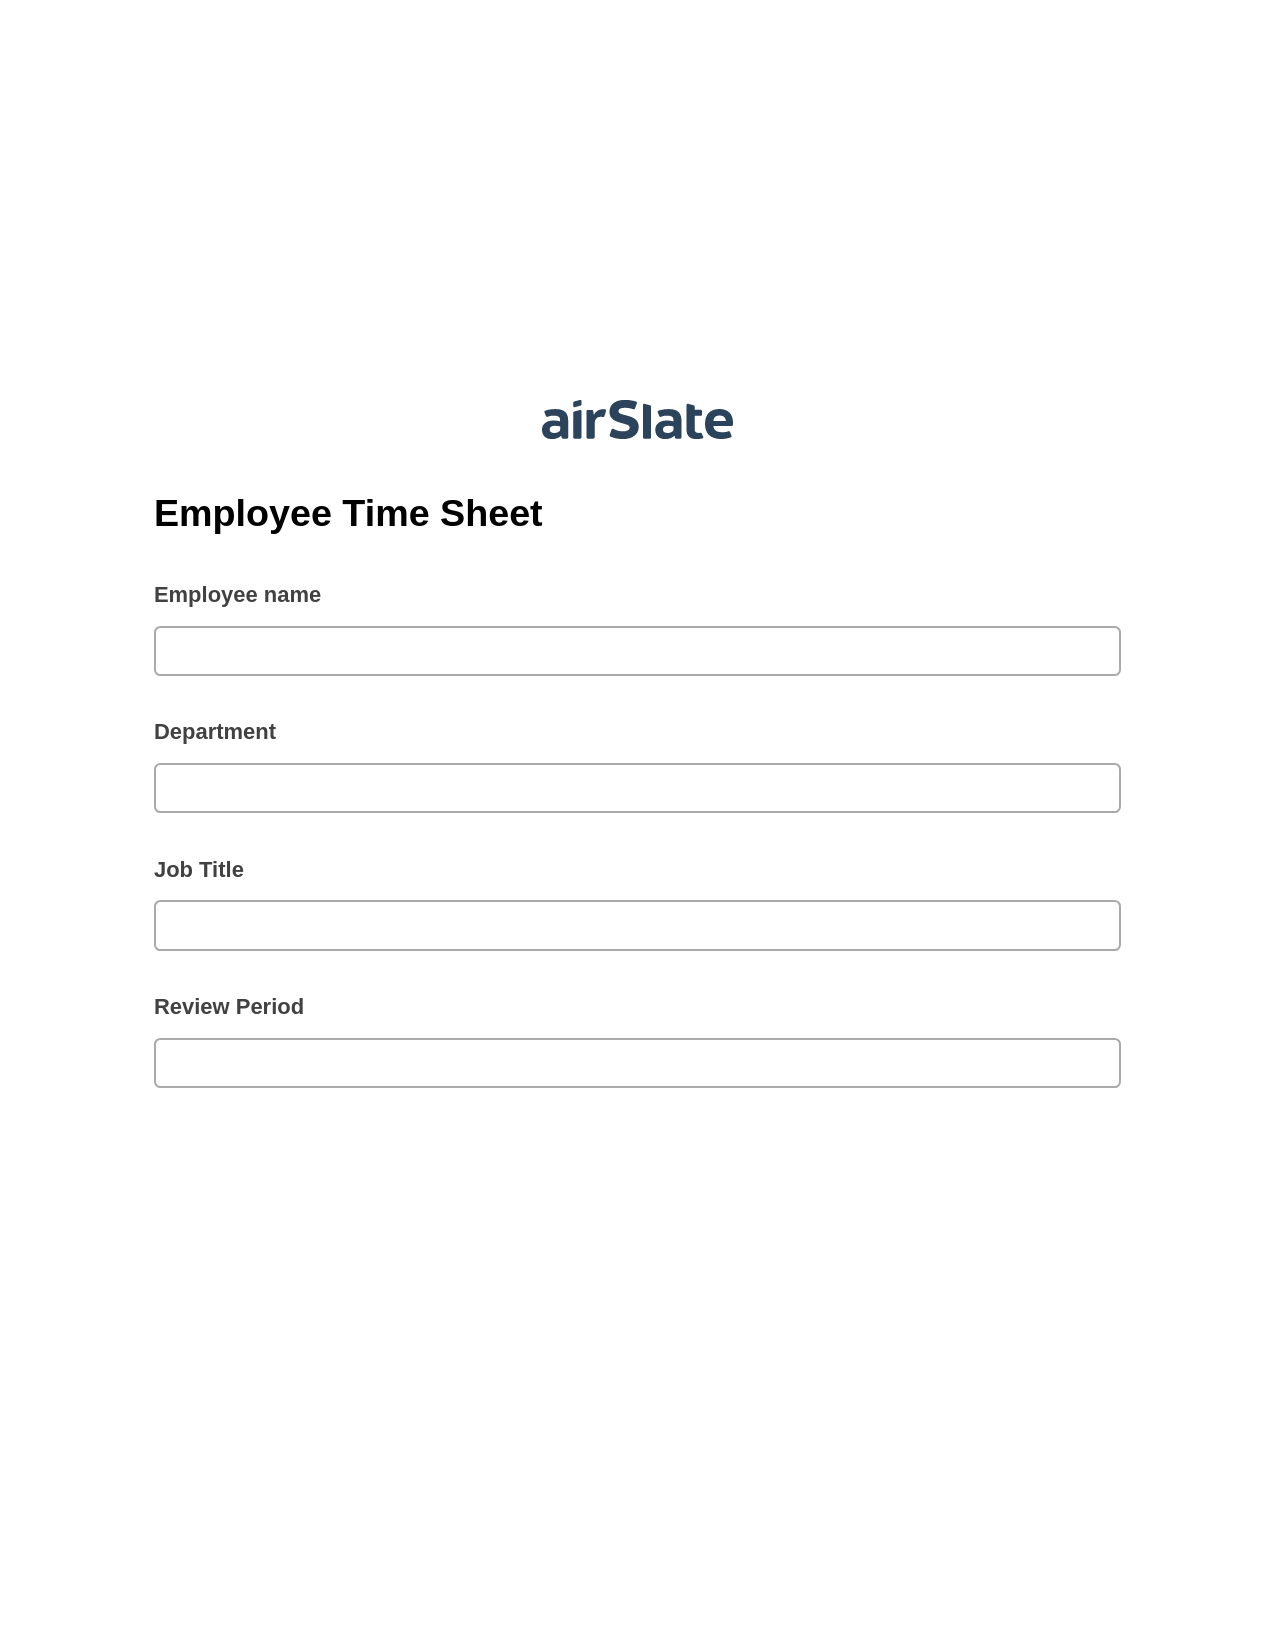 Multirole Employee Time Sheet Pre-fill Document Bot, Update Audit Trail Bot, Email Notification Postfinish Bot